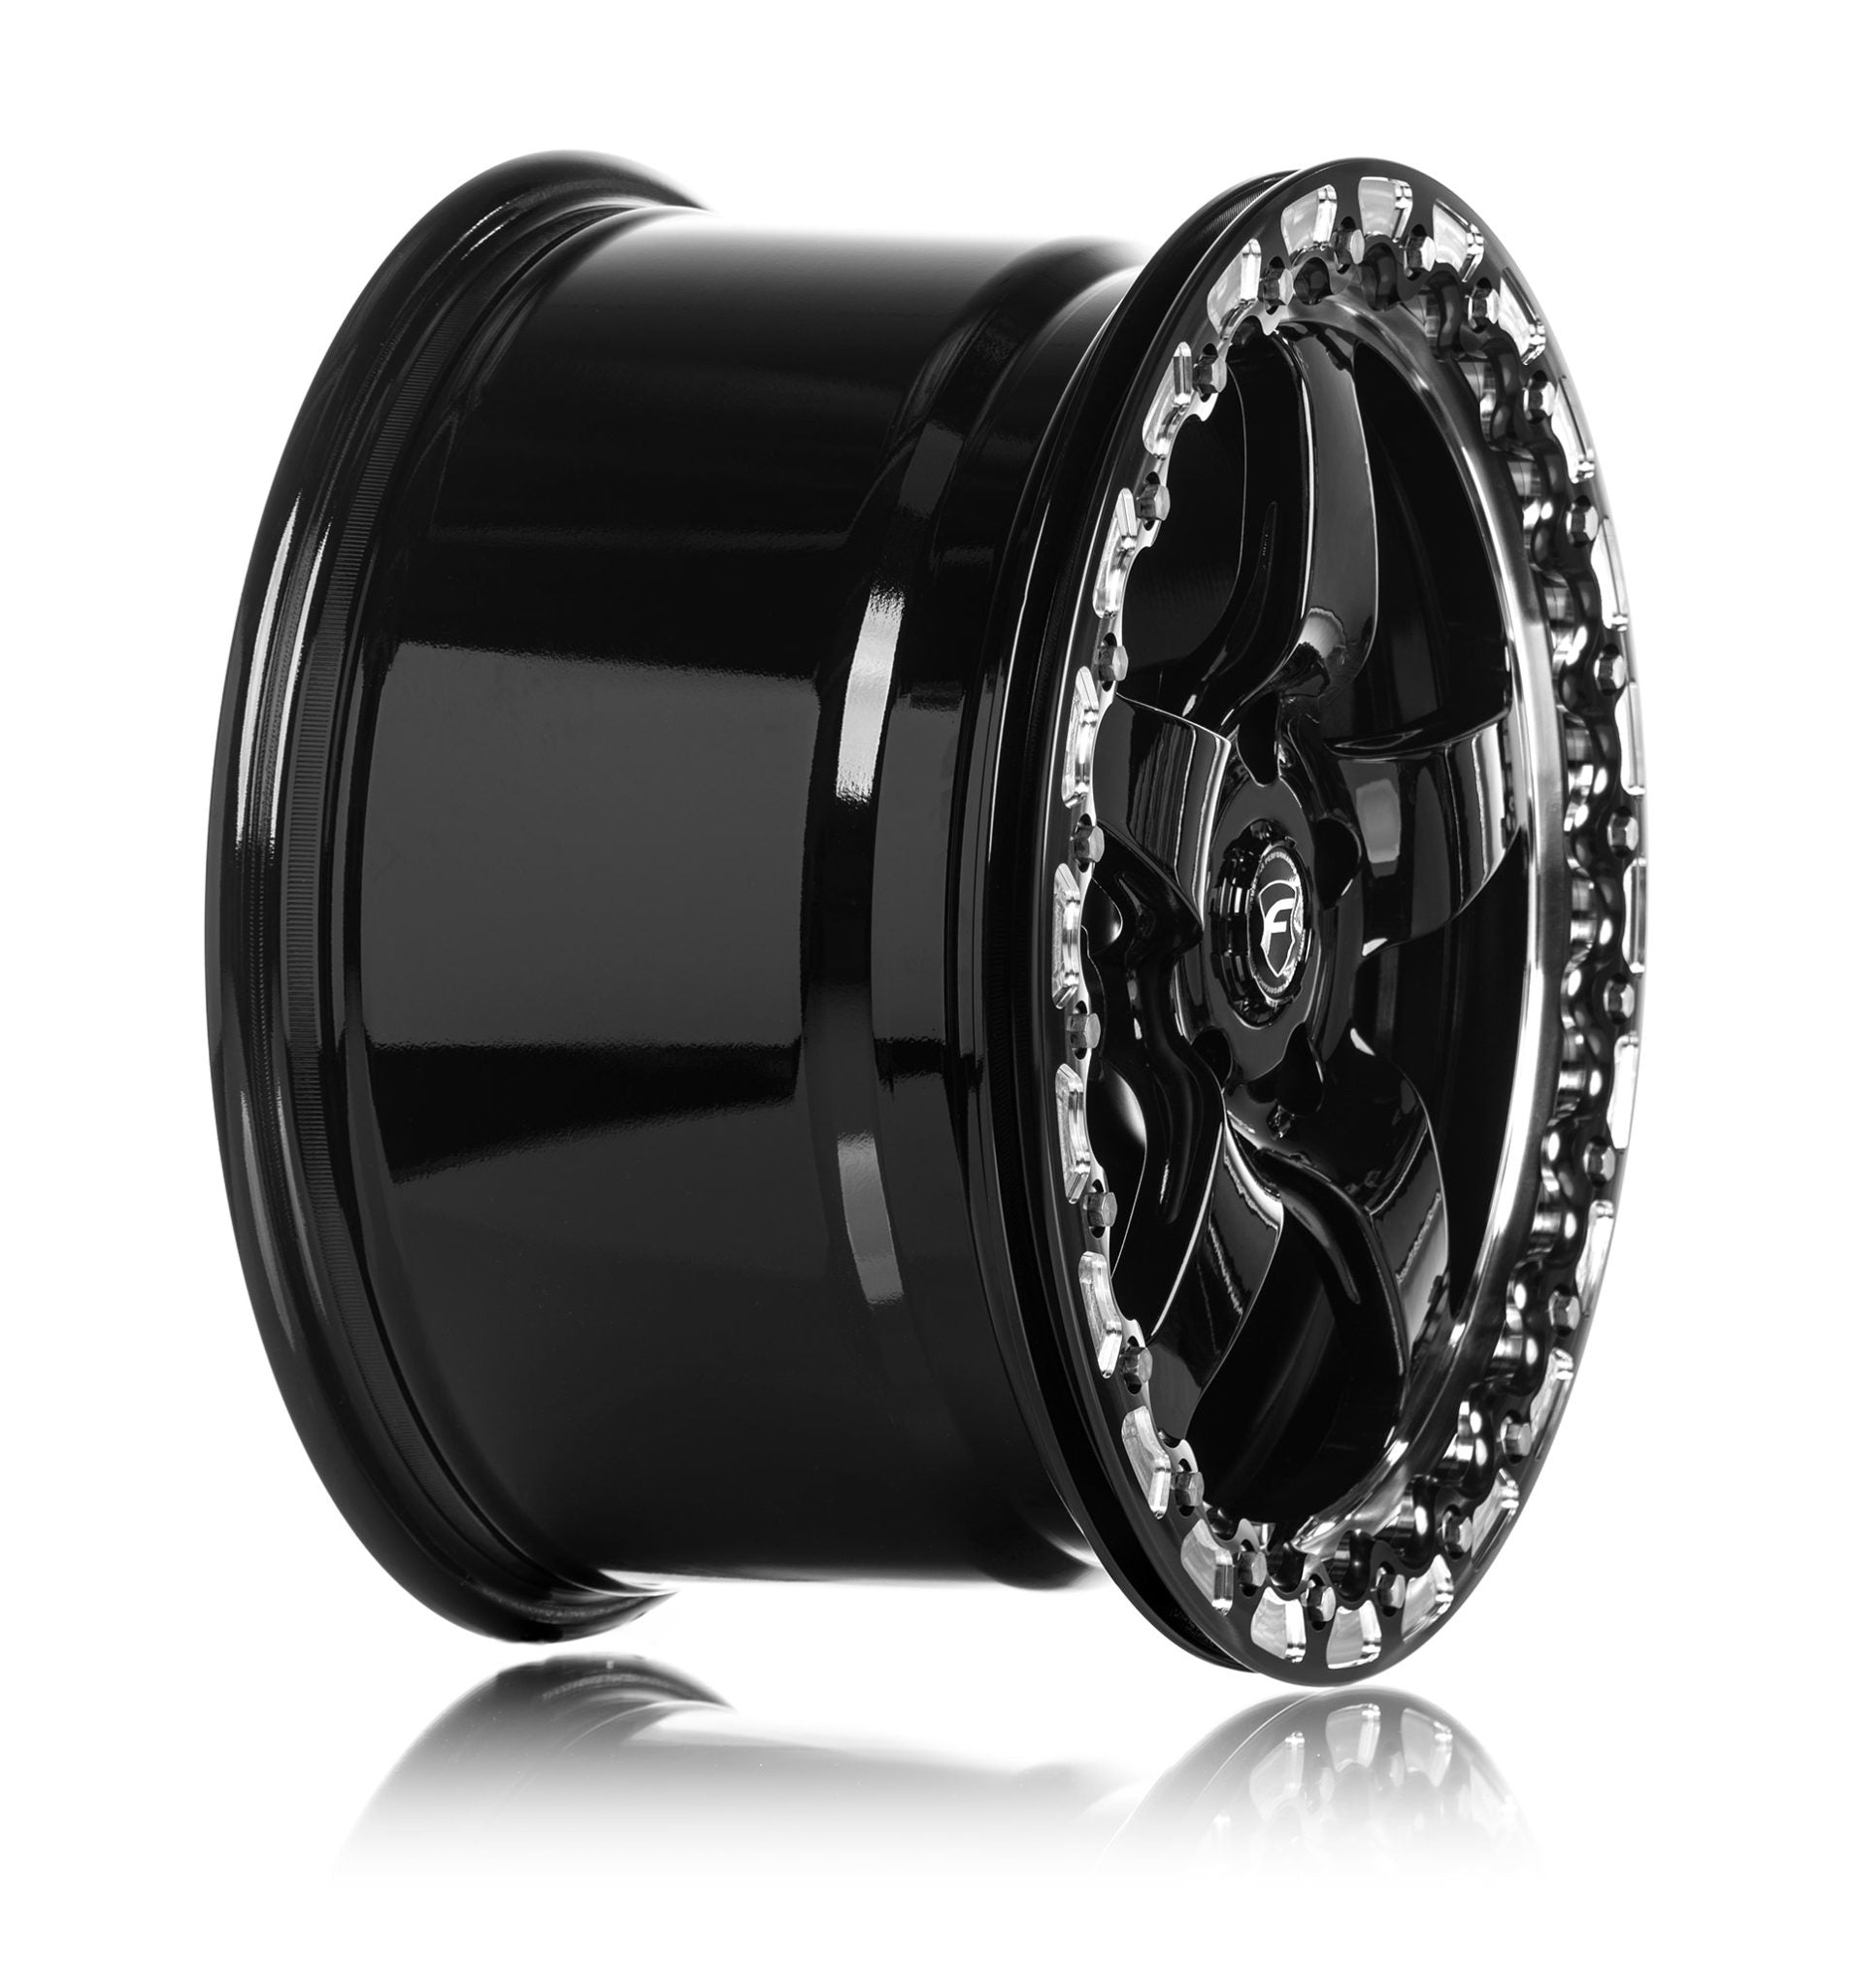 Forgestar D5 BEADLOCK Drag Racing Wheels - Gloss Black w/Machined Lip - 18x12 - Sold Individually - Motorsports LA